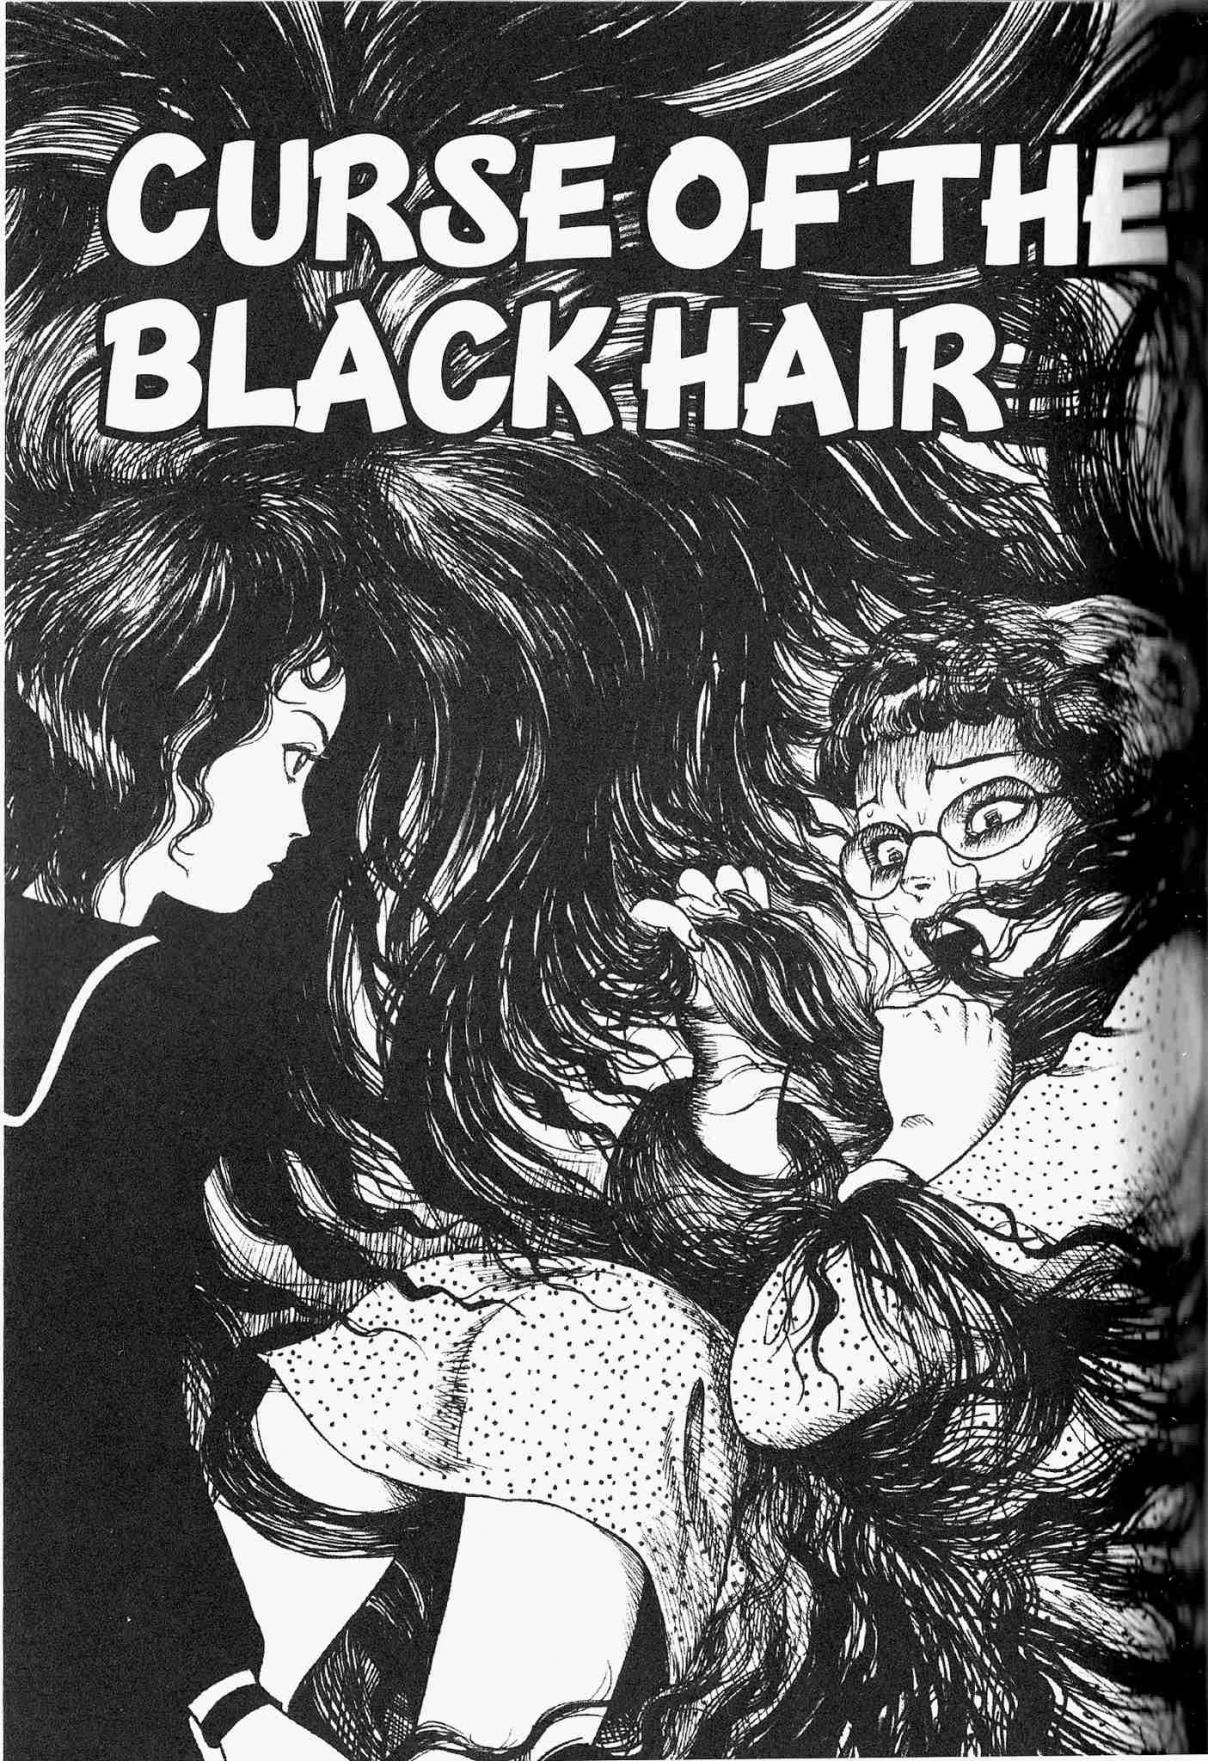 Death's Reflection Vol. 1 Ch. 4 Curse of the Black Hair